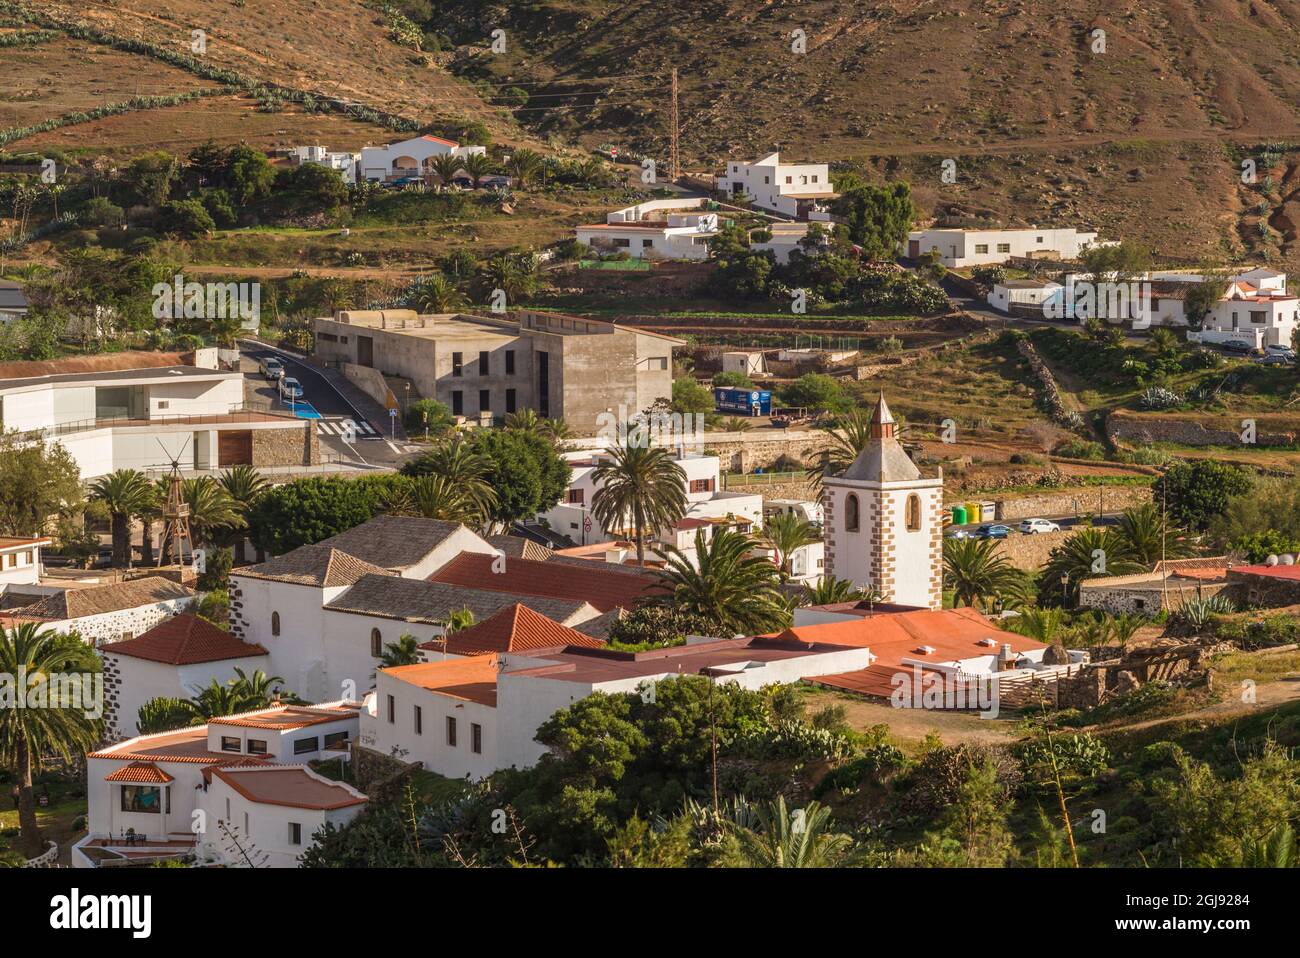 Spain, Canary Islands, Fuerteventura Island, Betancuria, town view with Iglesia de Santa Maria church Stock Photo